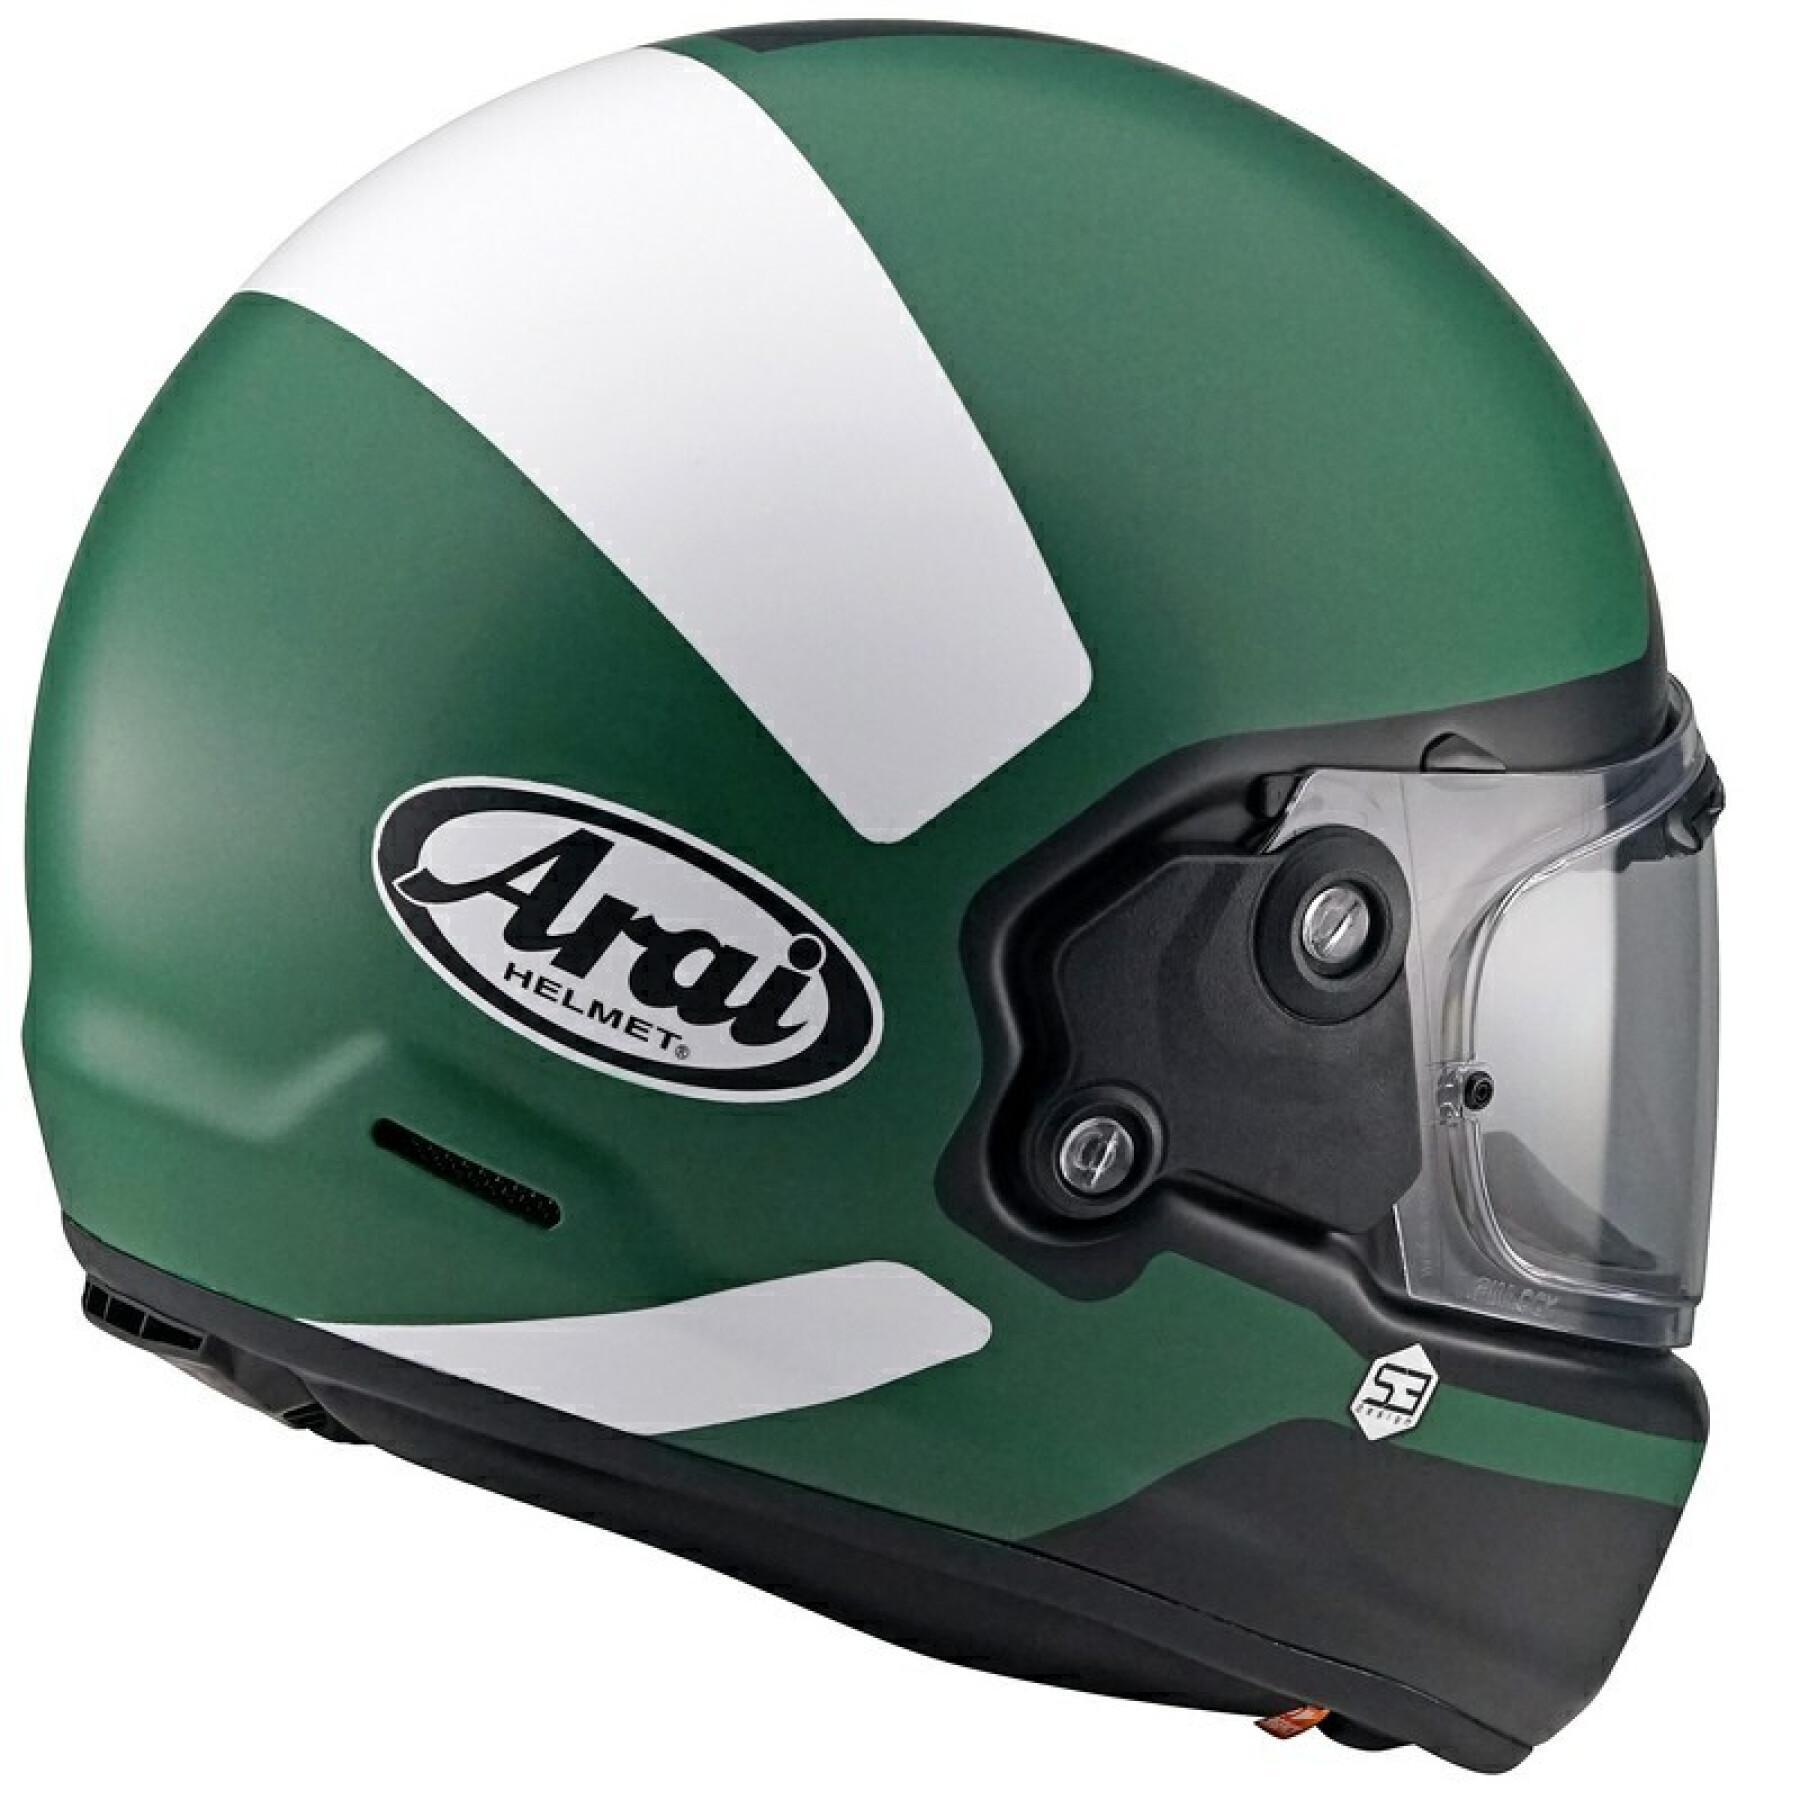 Full face motorcycle helmet Arai Concept-X Backer